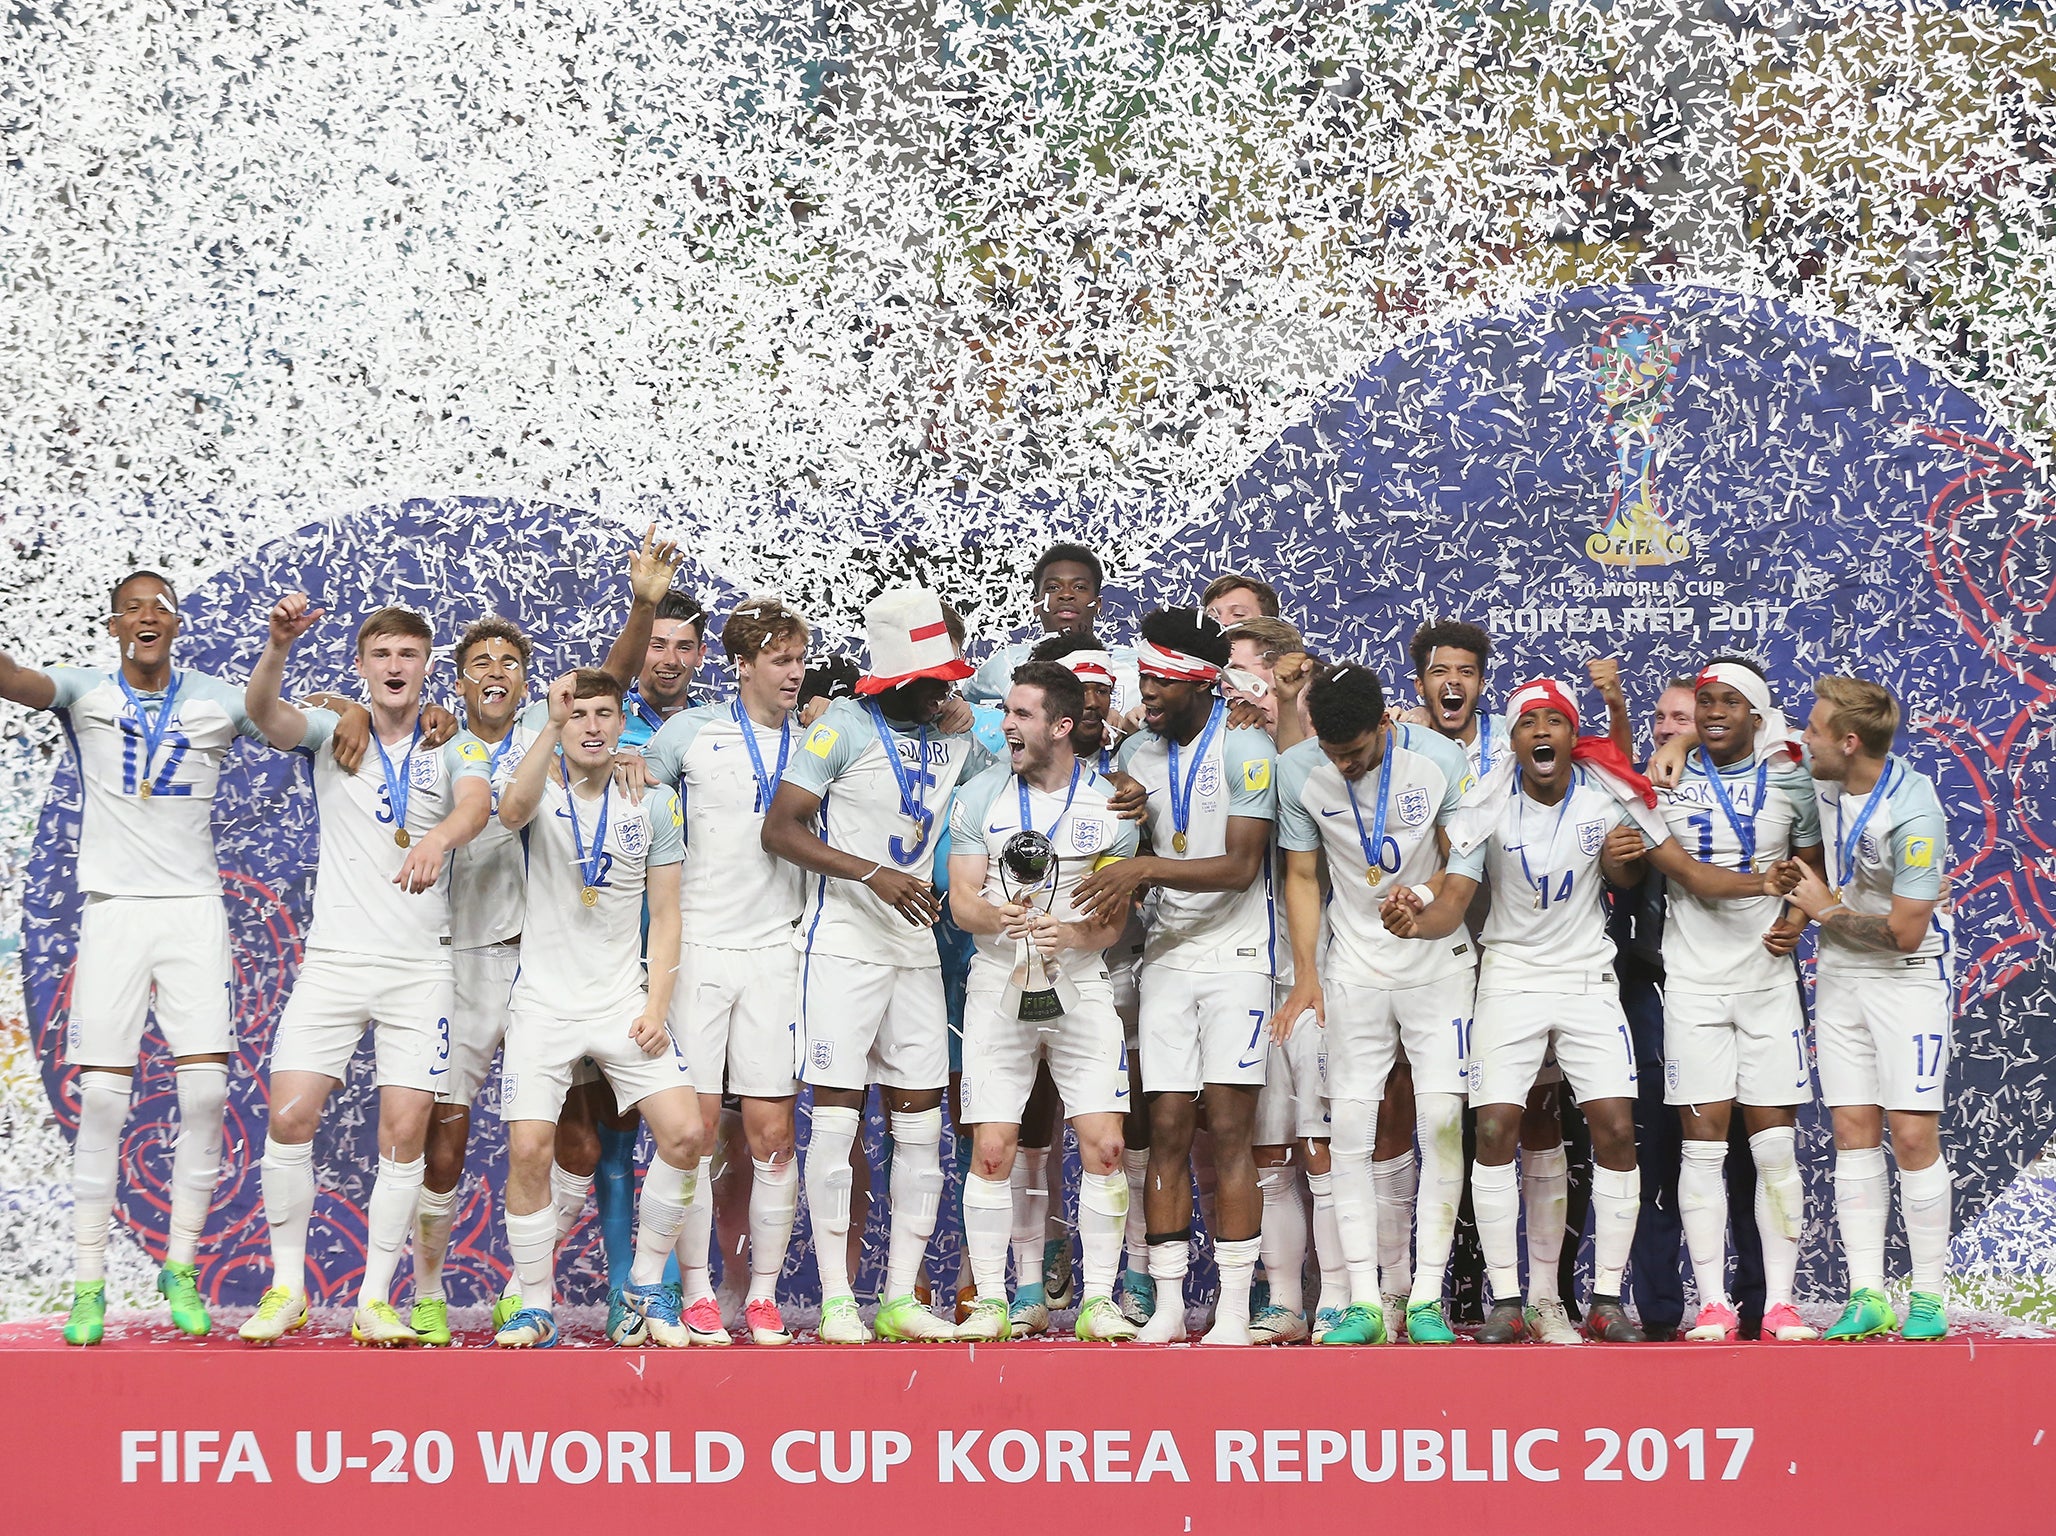 England won the U20 World Cup last June